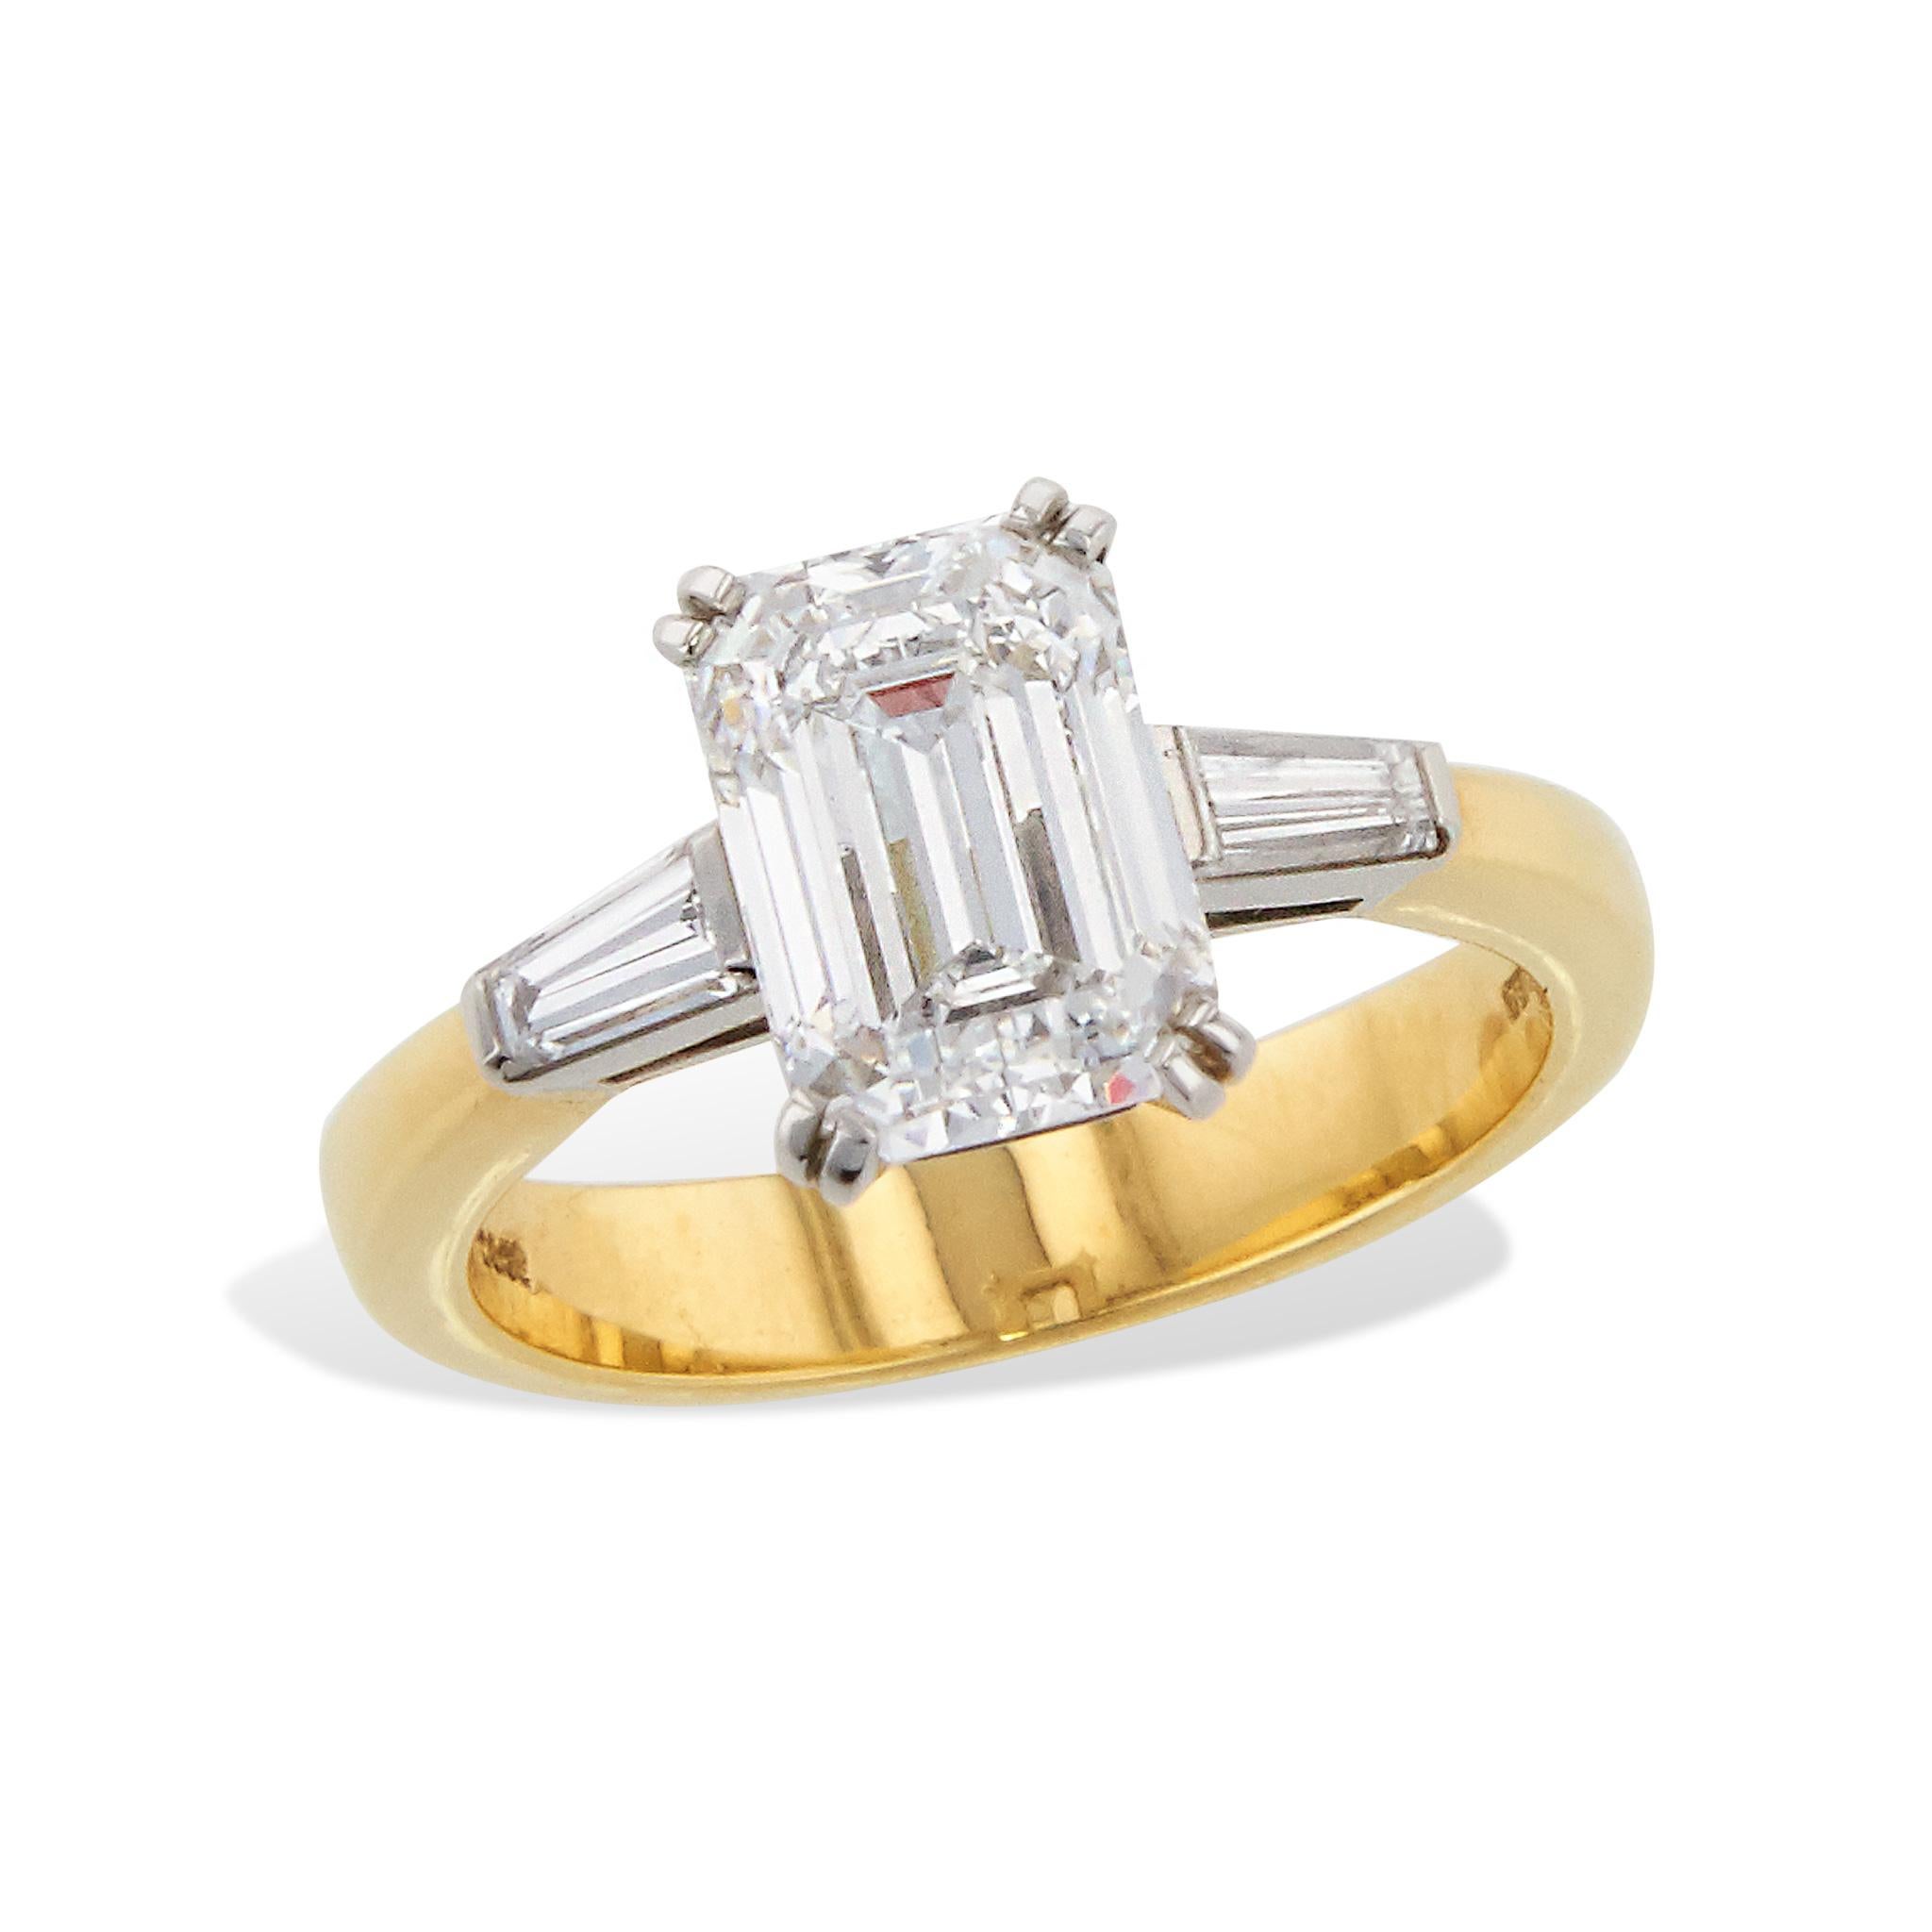 Tiffany & Co. circa 1990 Yellow Gold and Platinum Emerald Cut Diamond Ring In Excellent Condition For Sale In Miami, FL